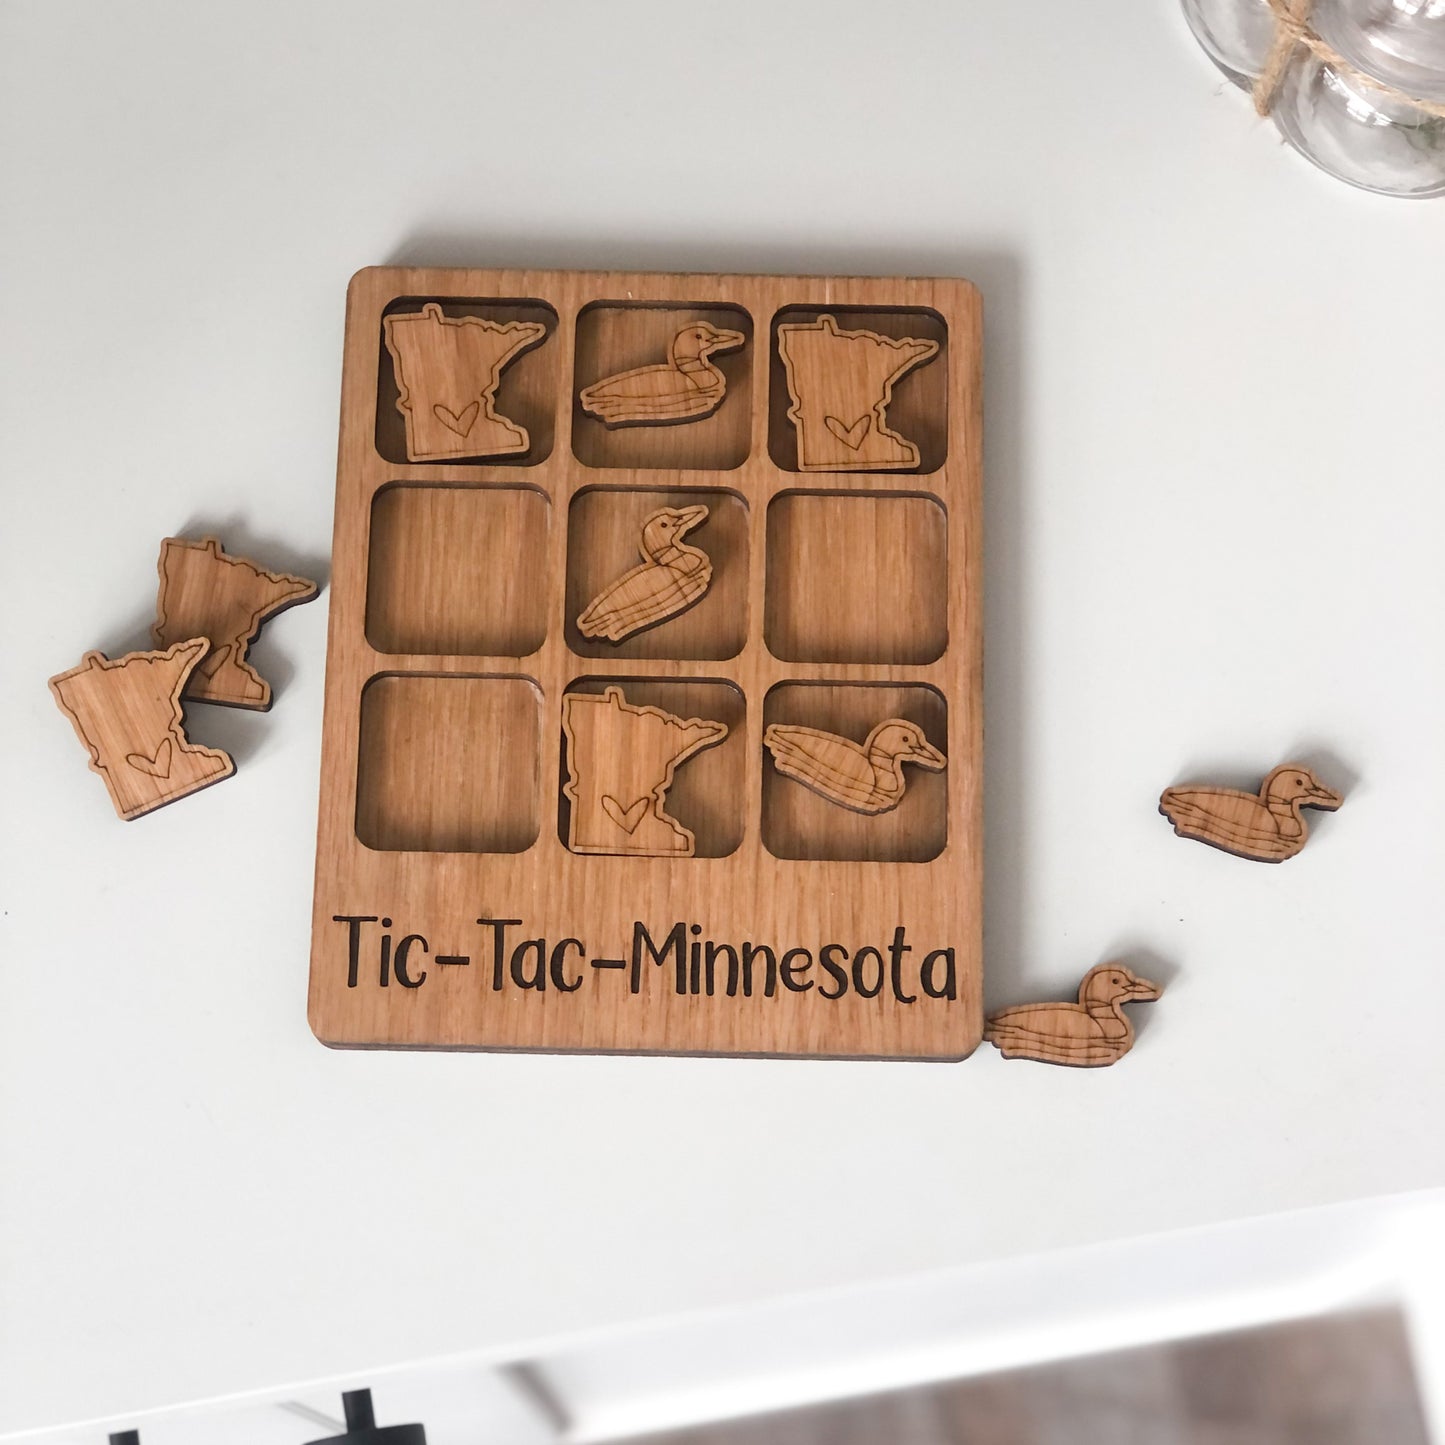 Tic-Tac-Minnesota